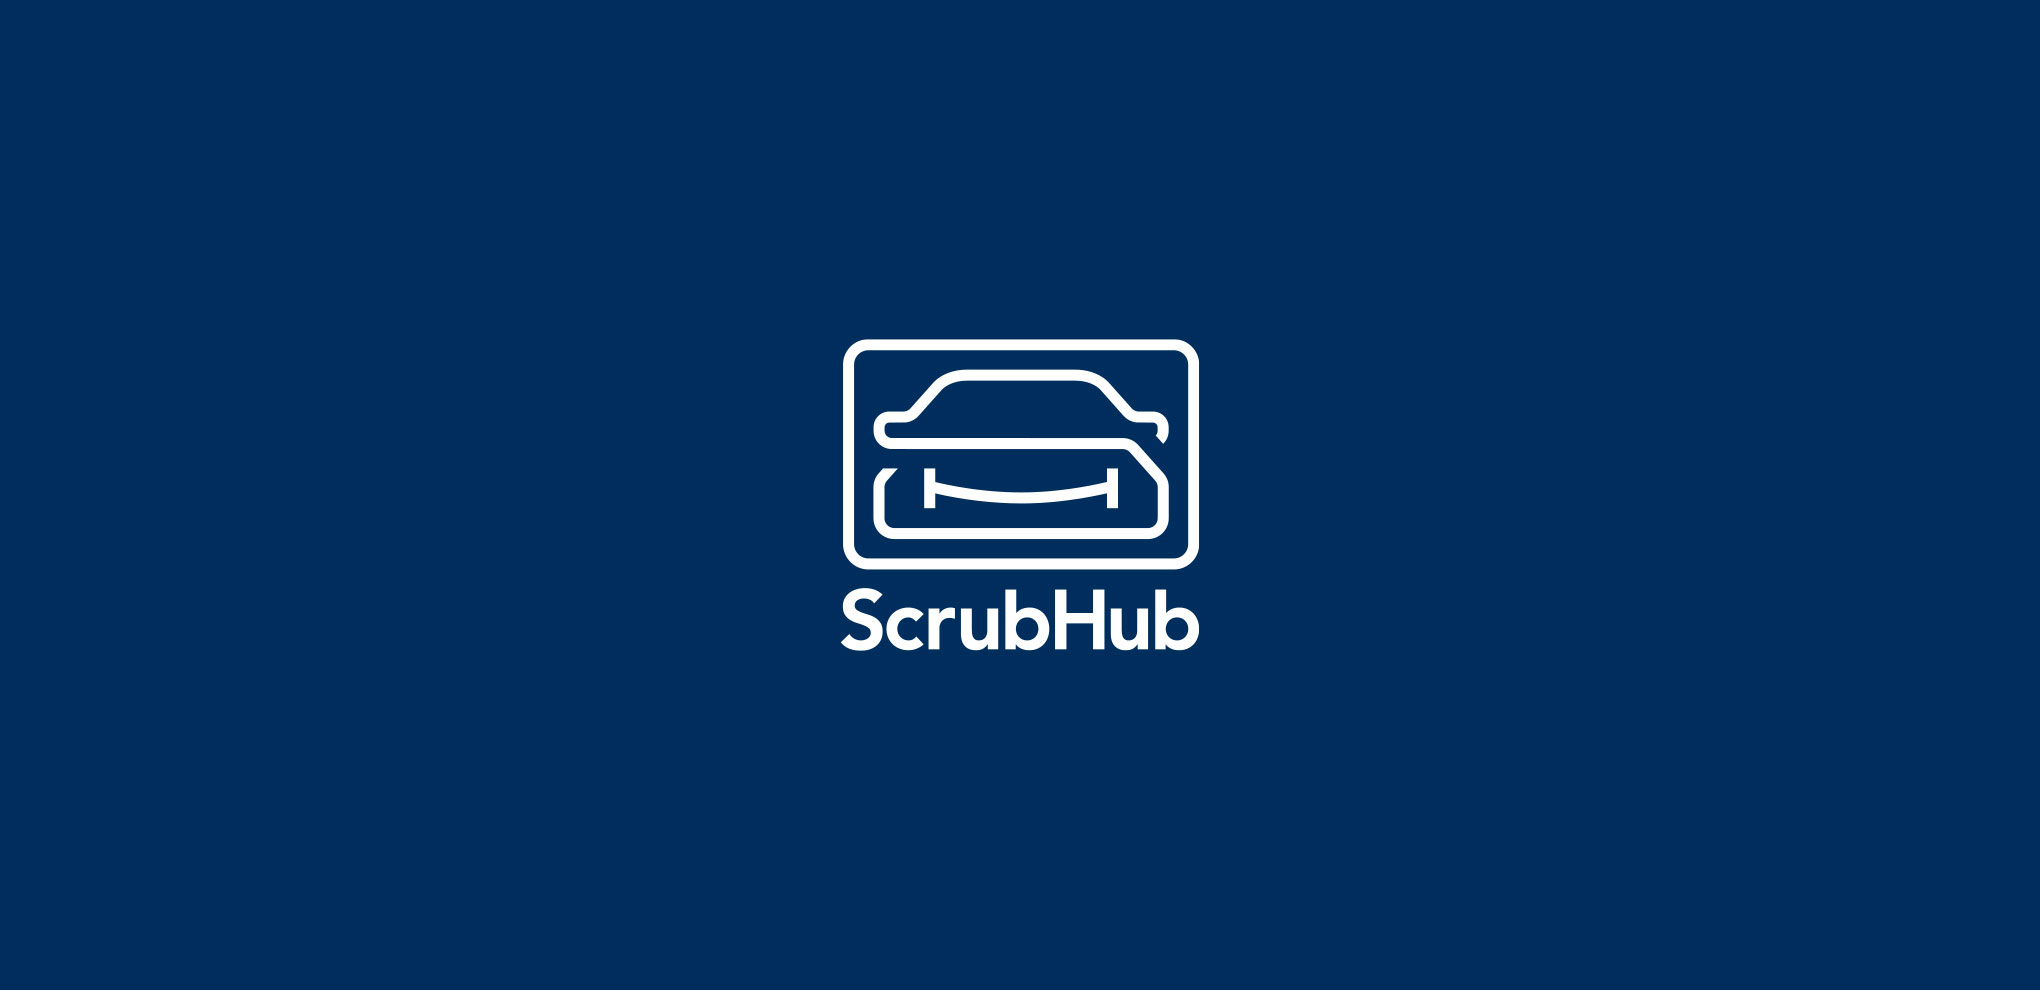 ScrubHub